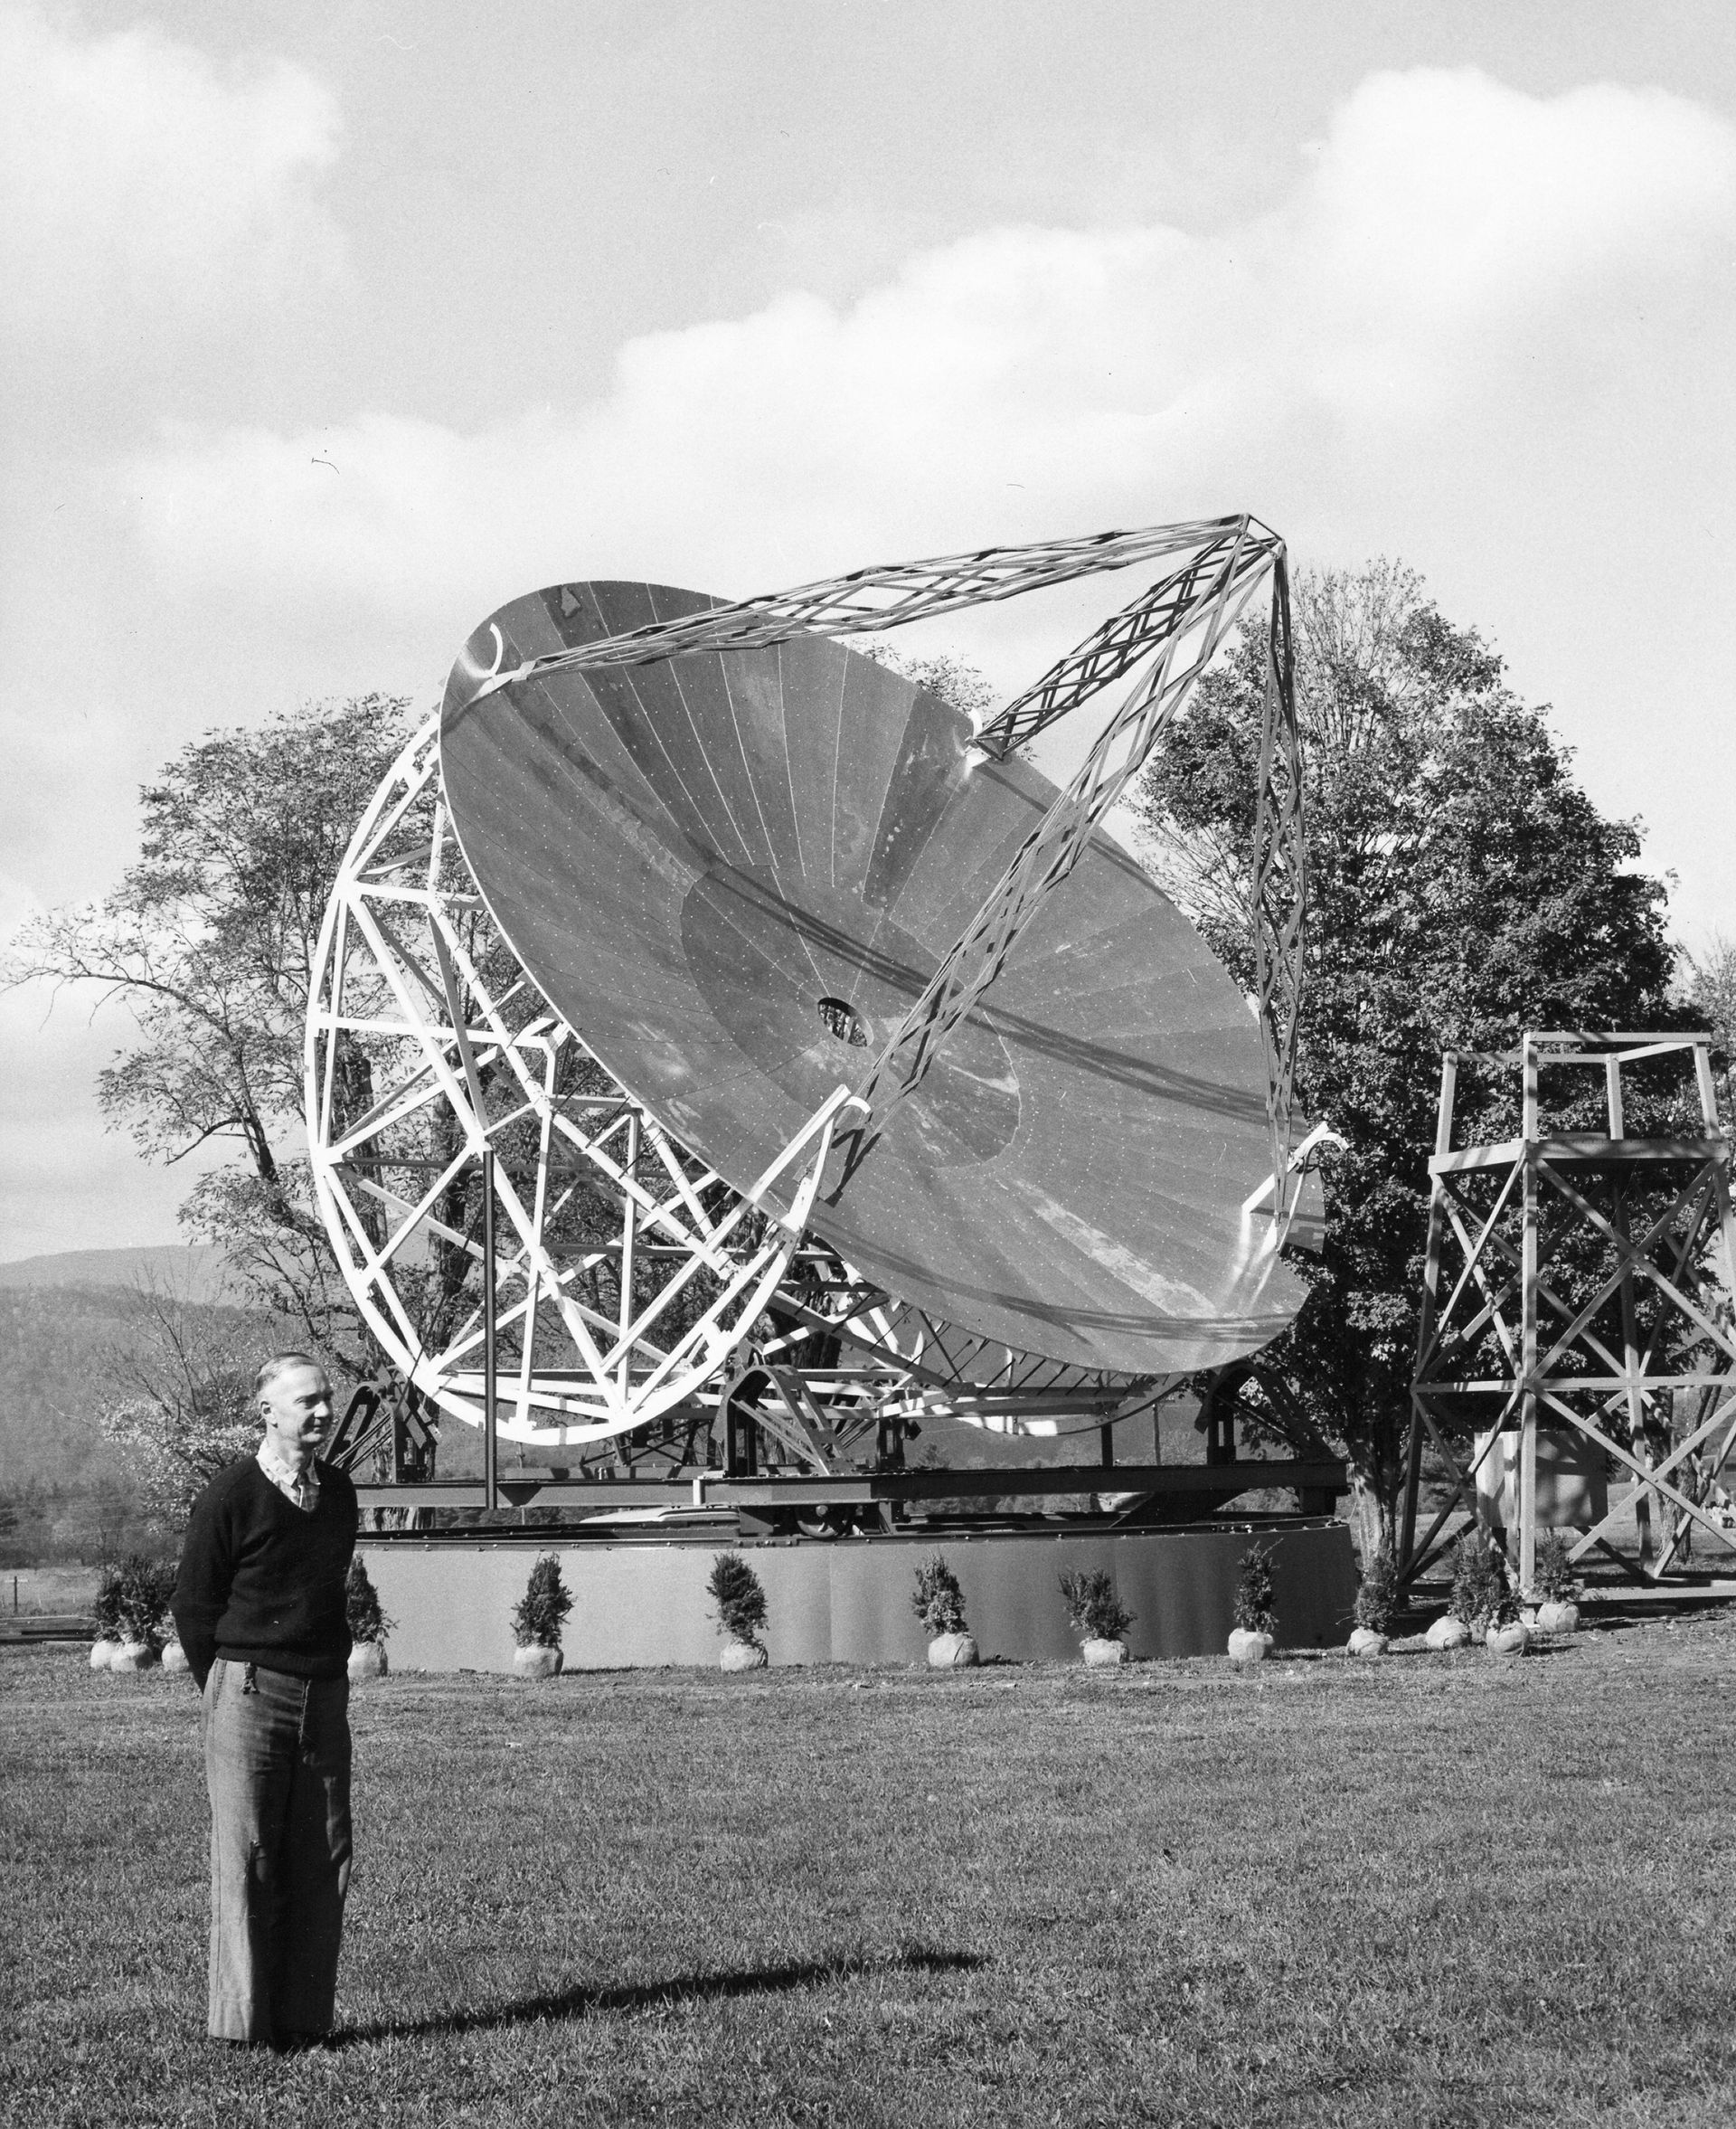 World's First Radio Telescope, world record in Wheaton, Illinois
